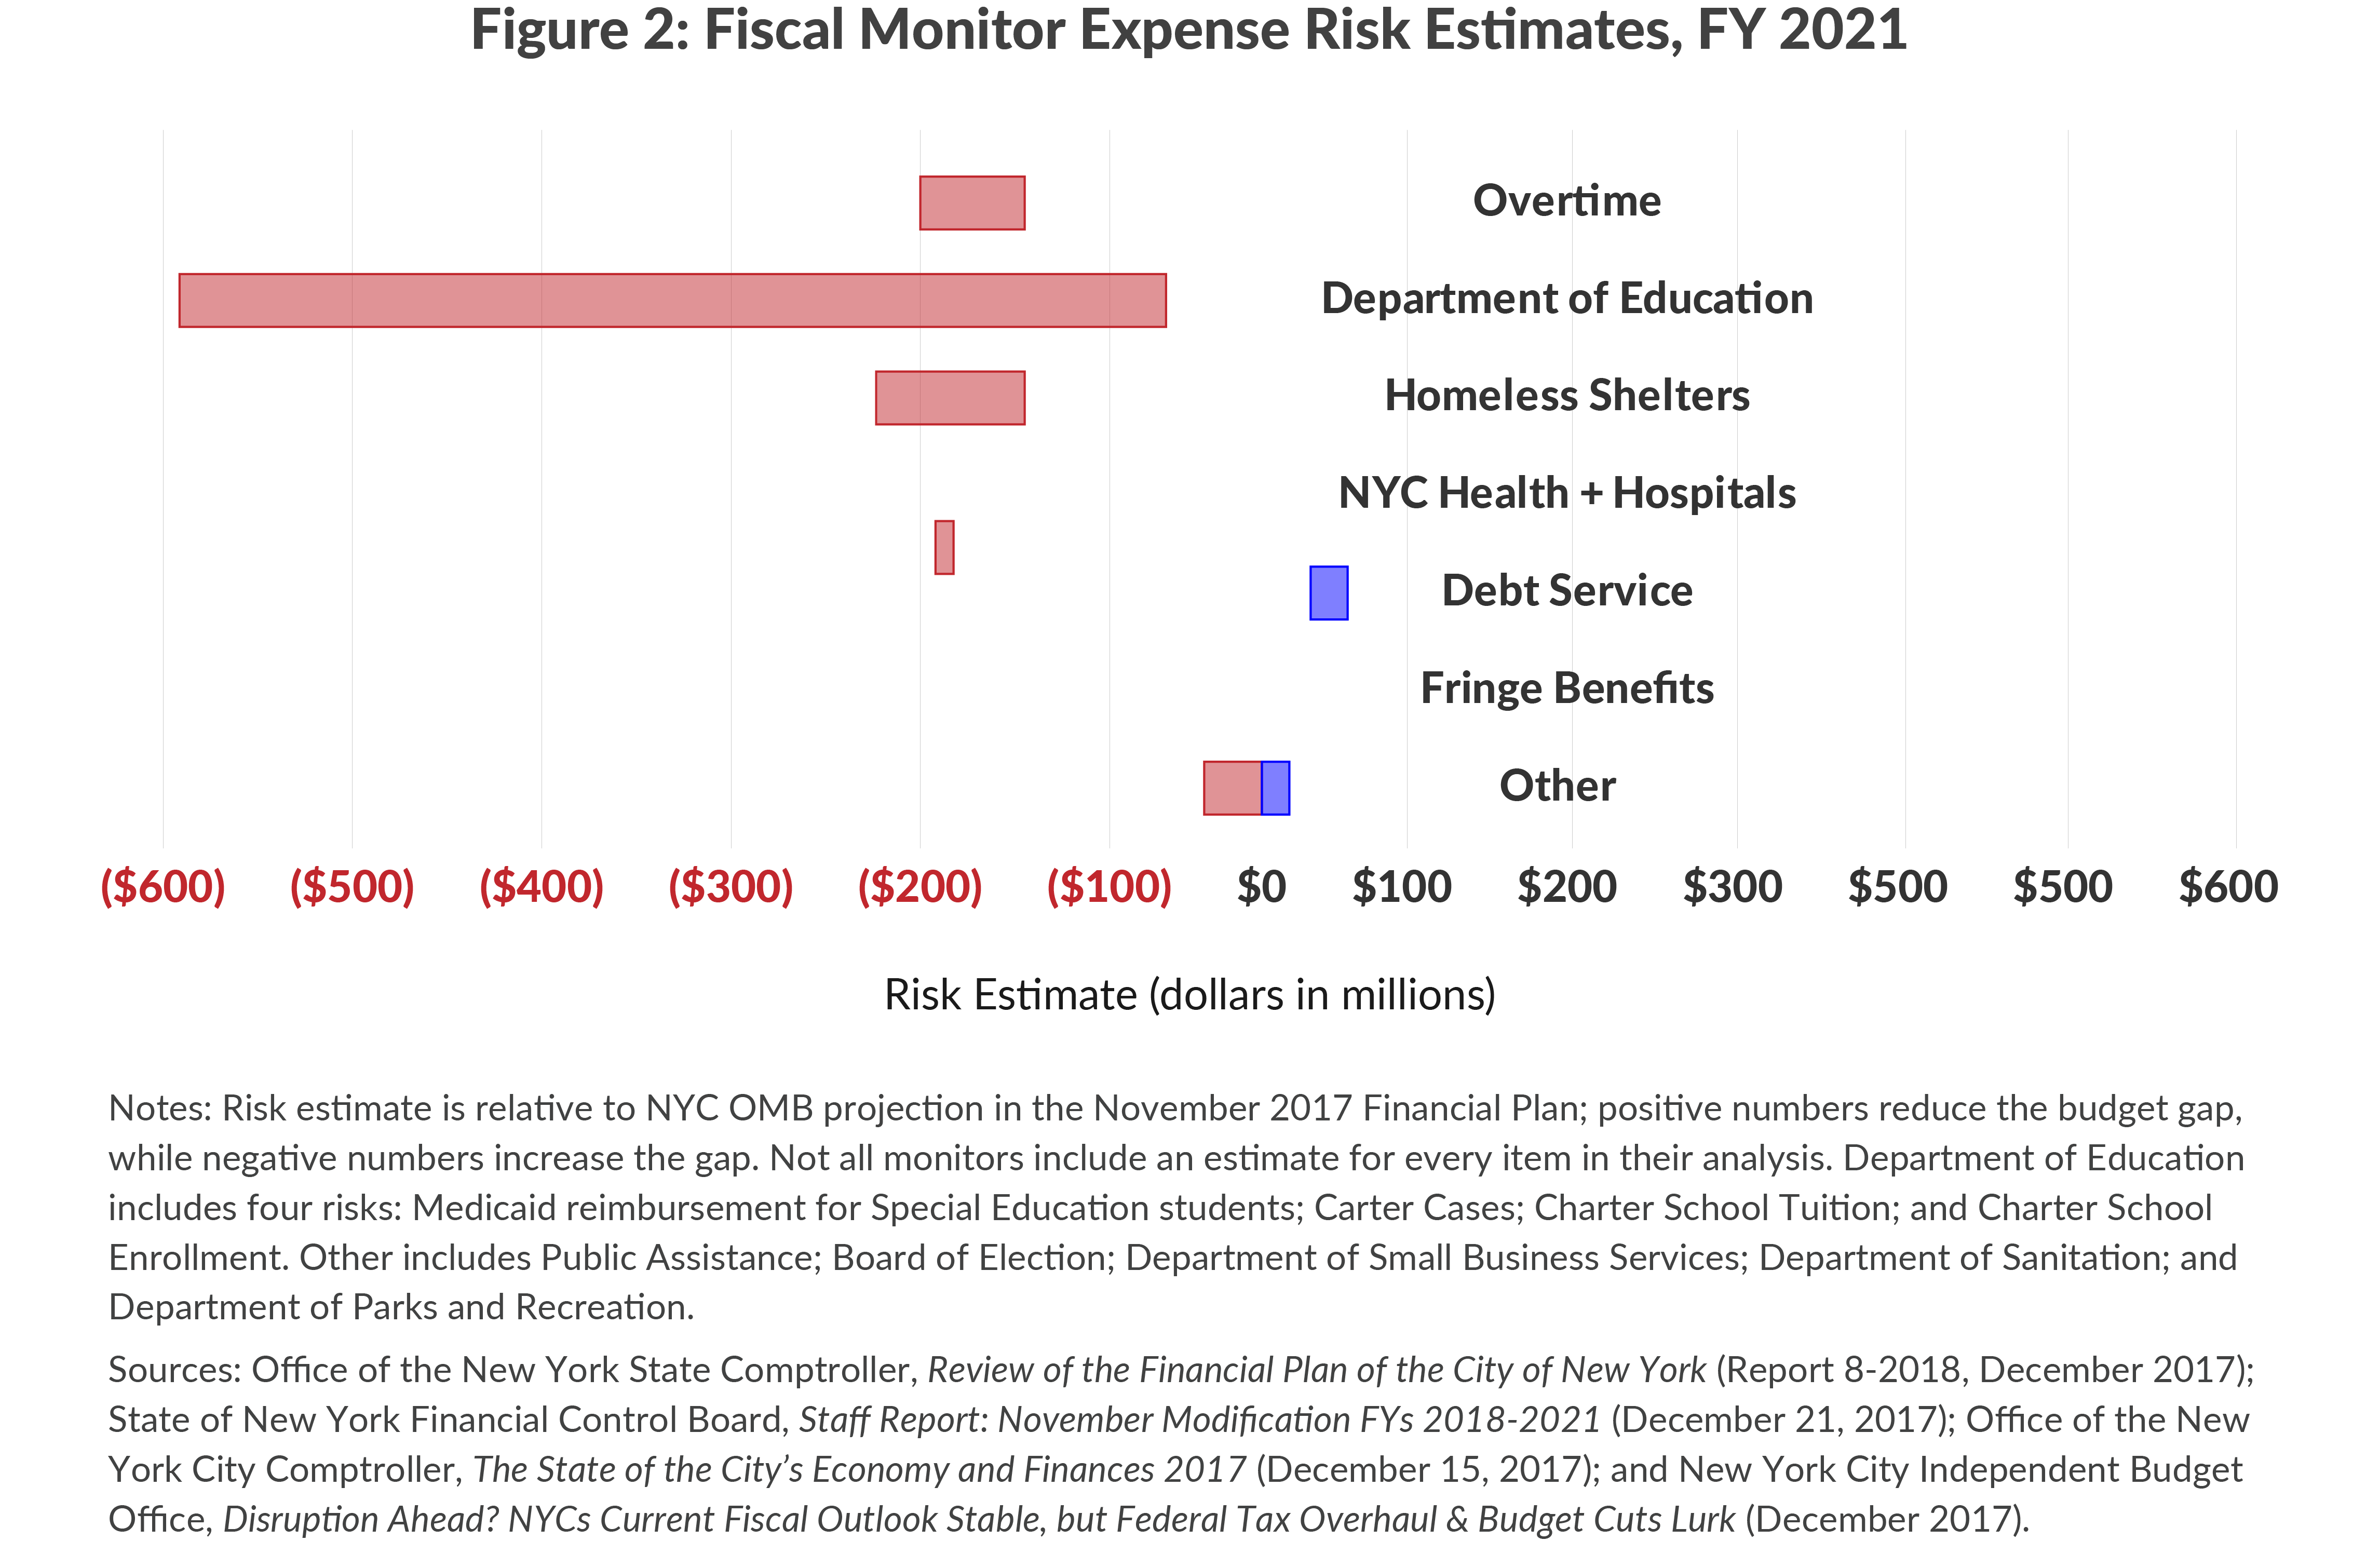 Figure 2: Fiscal Monitor Expense Risk Estimates, FY 2021